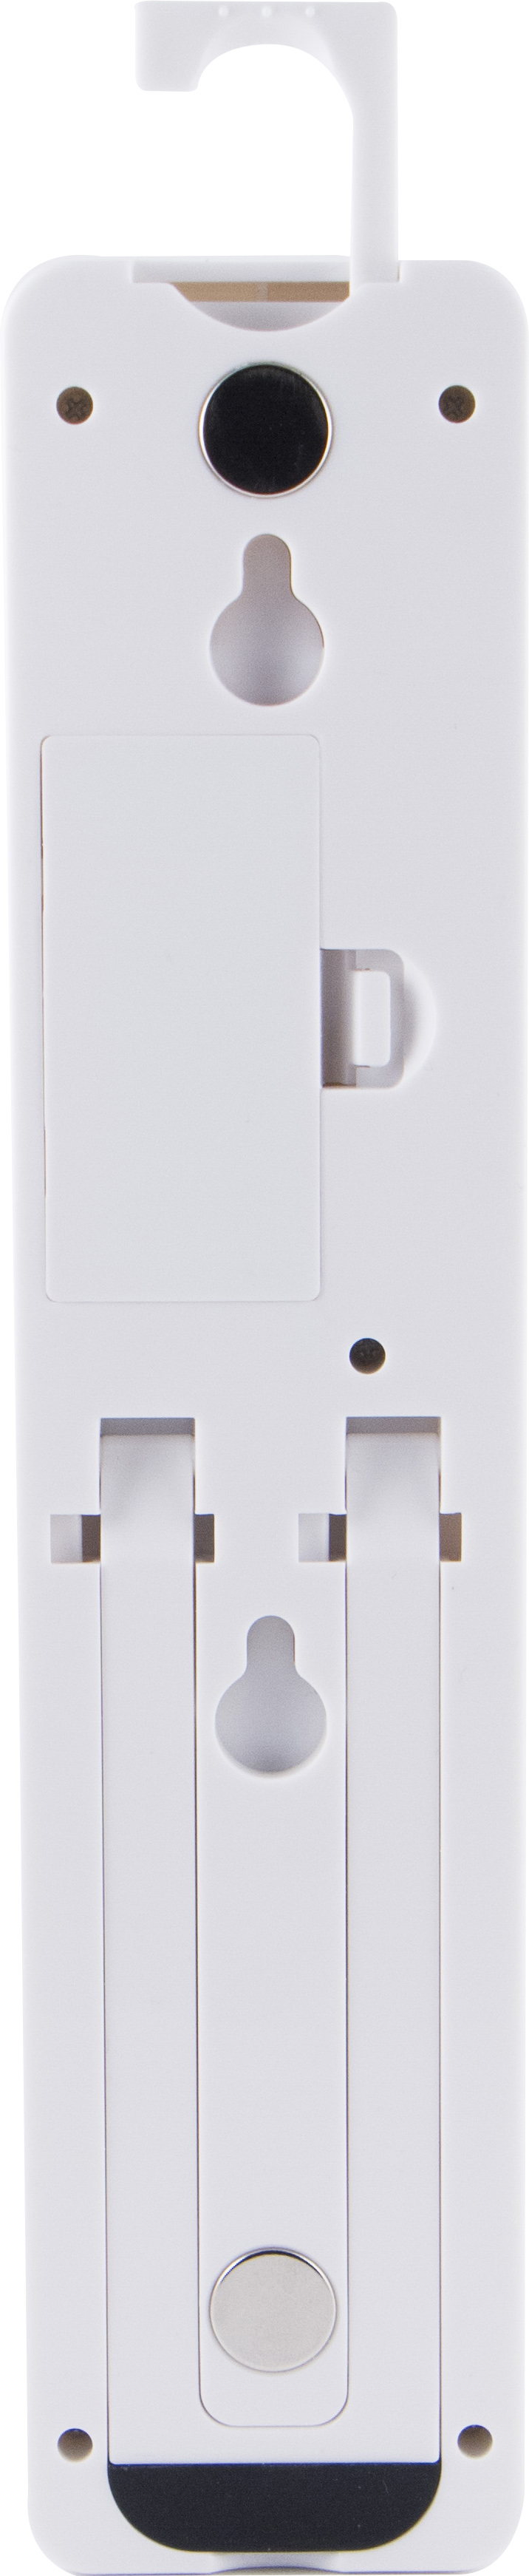 Energizer Wireless Swivel LED Task Light, 10 in. White, Battery Operated - image 5 of 7